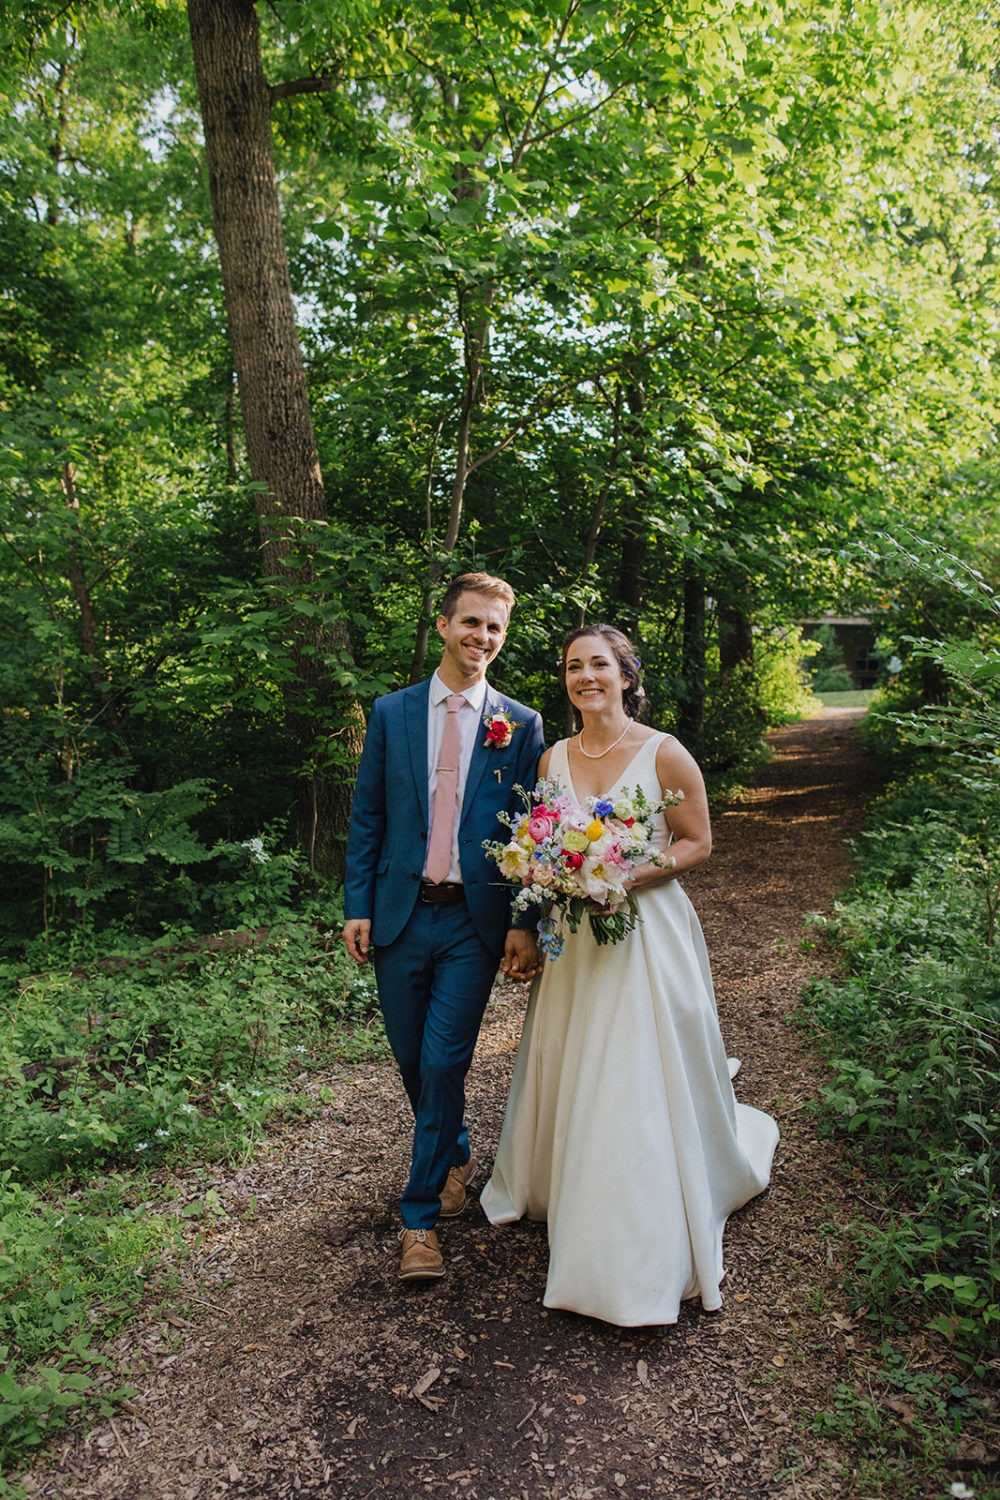 Couple walks through green woods at nature wedding venue